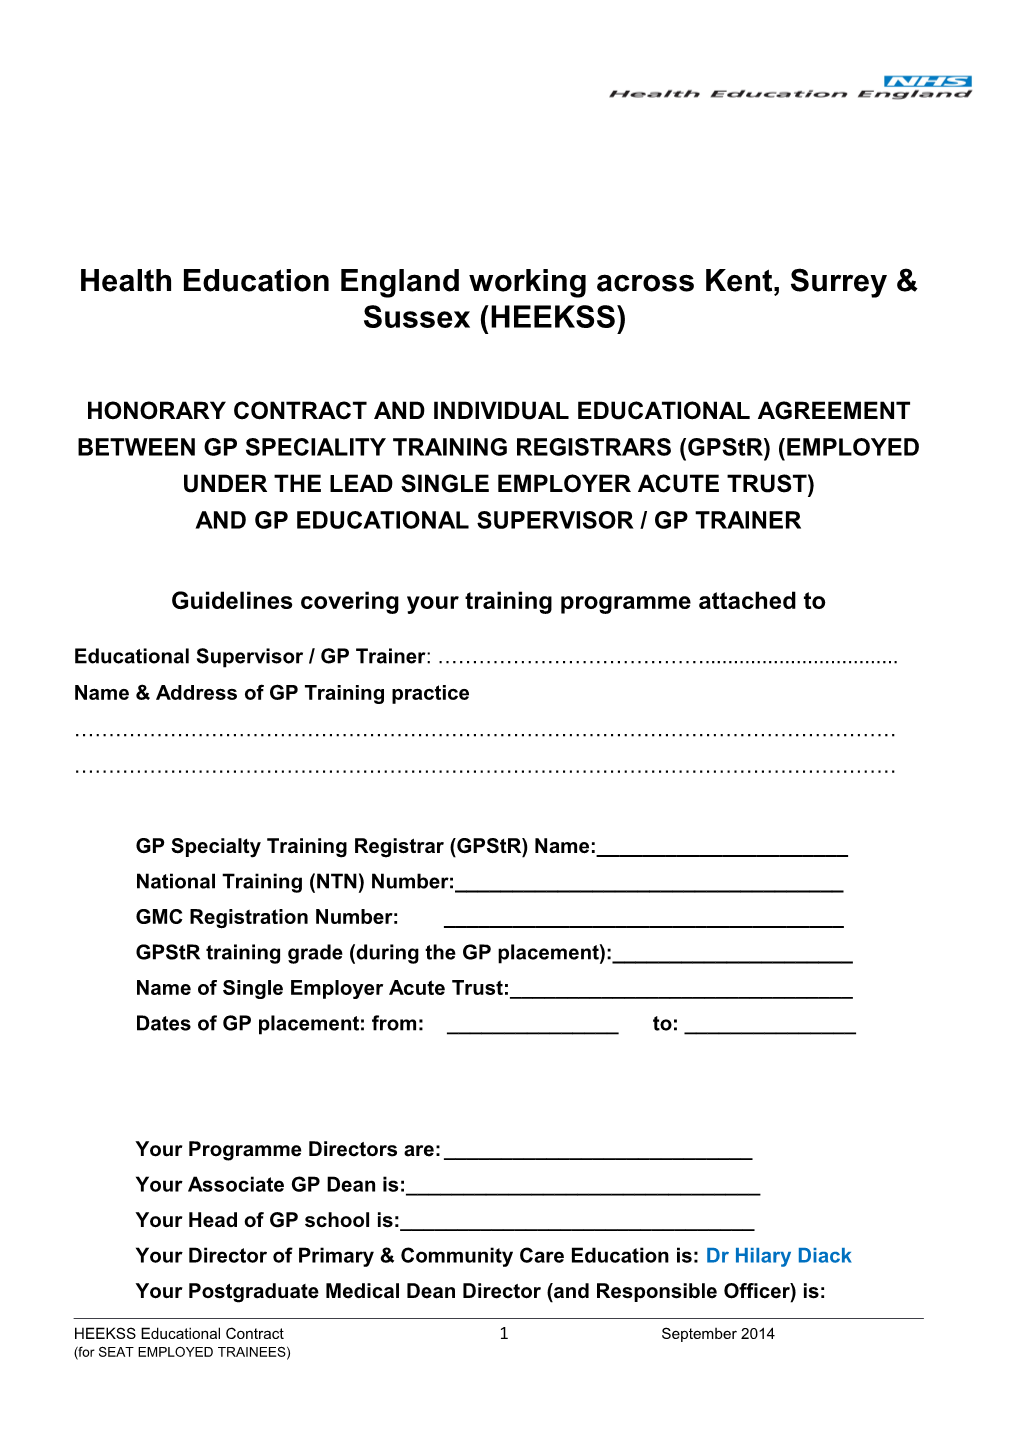 Health Education England Working Acrosskent, Surreysussex (HEEKSS)